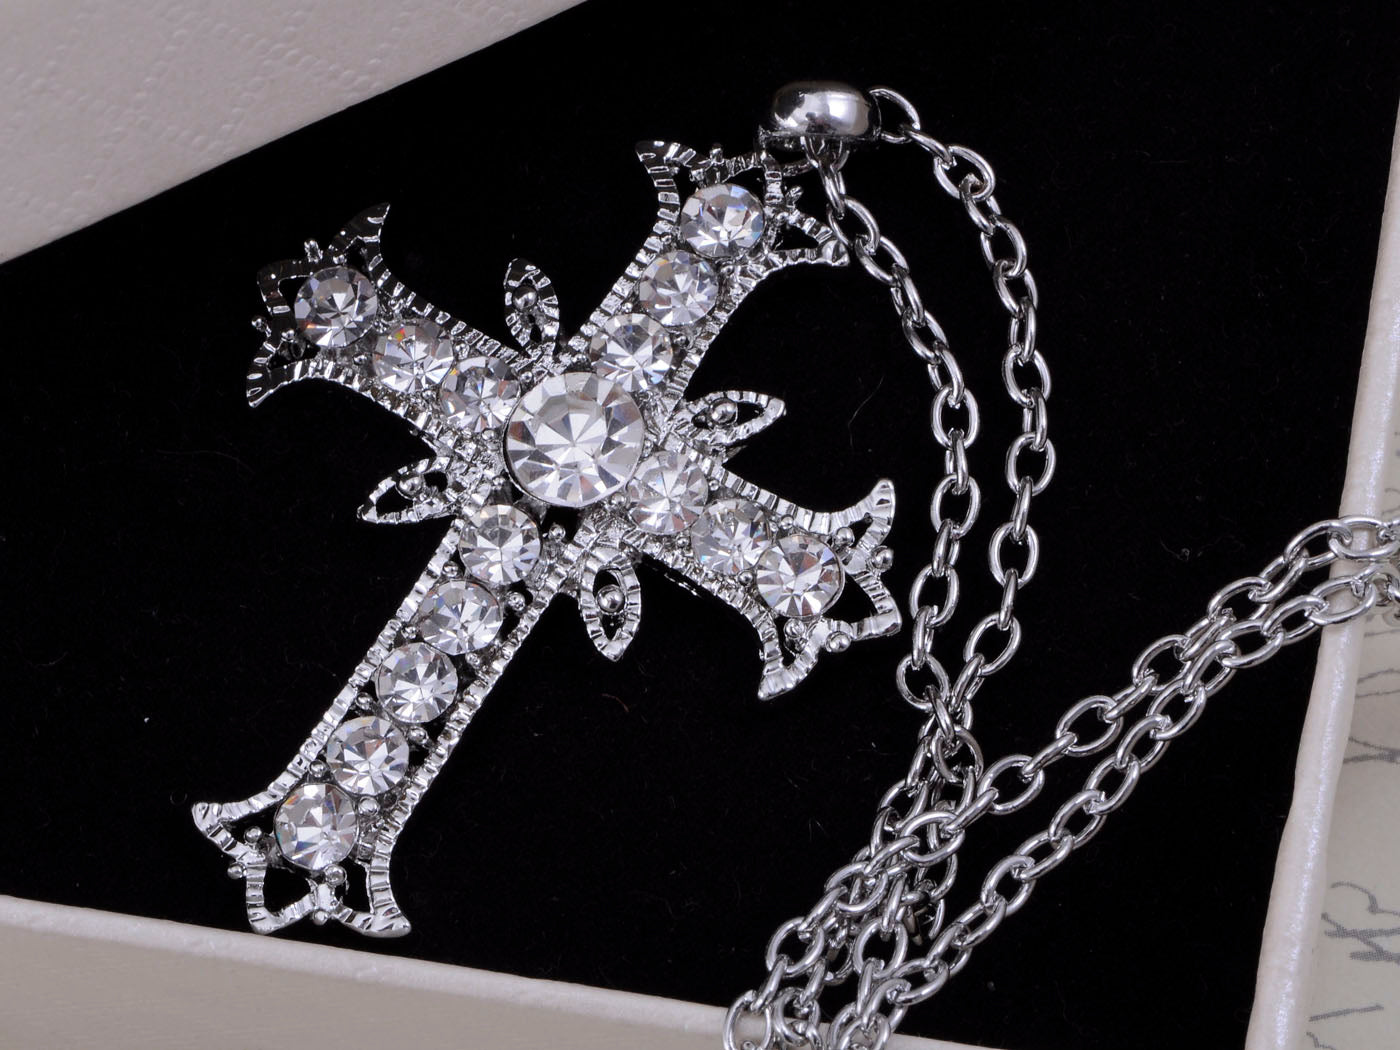 Cross Pendant Necklace Gun Chopper Black Holy Cross